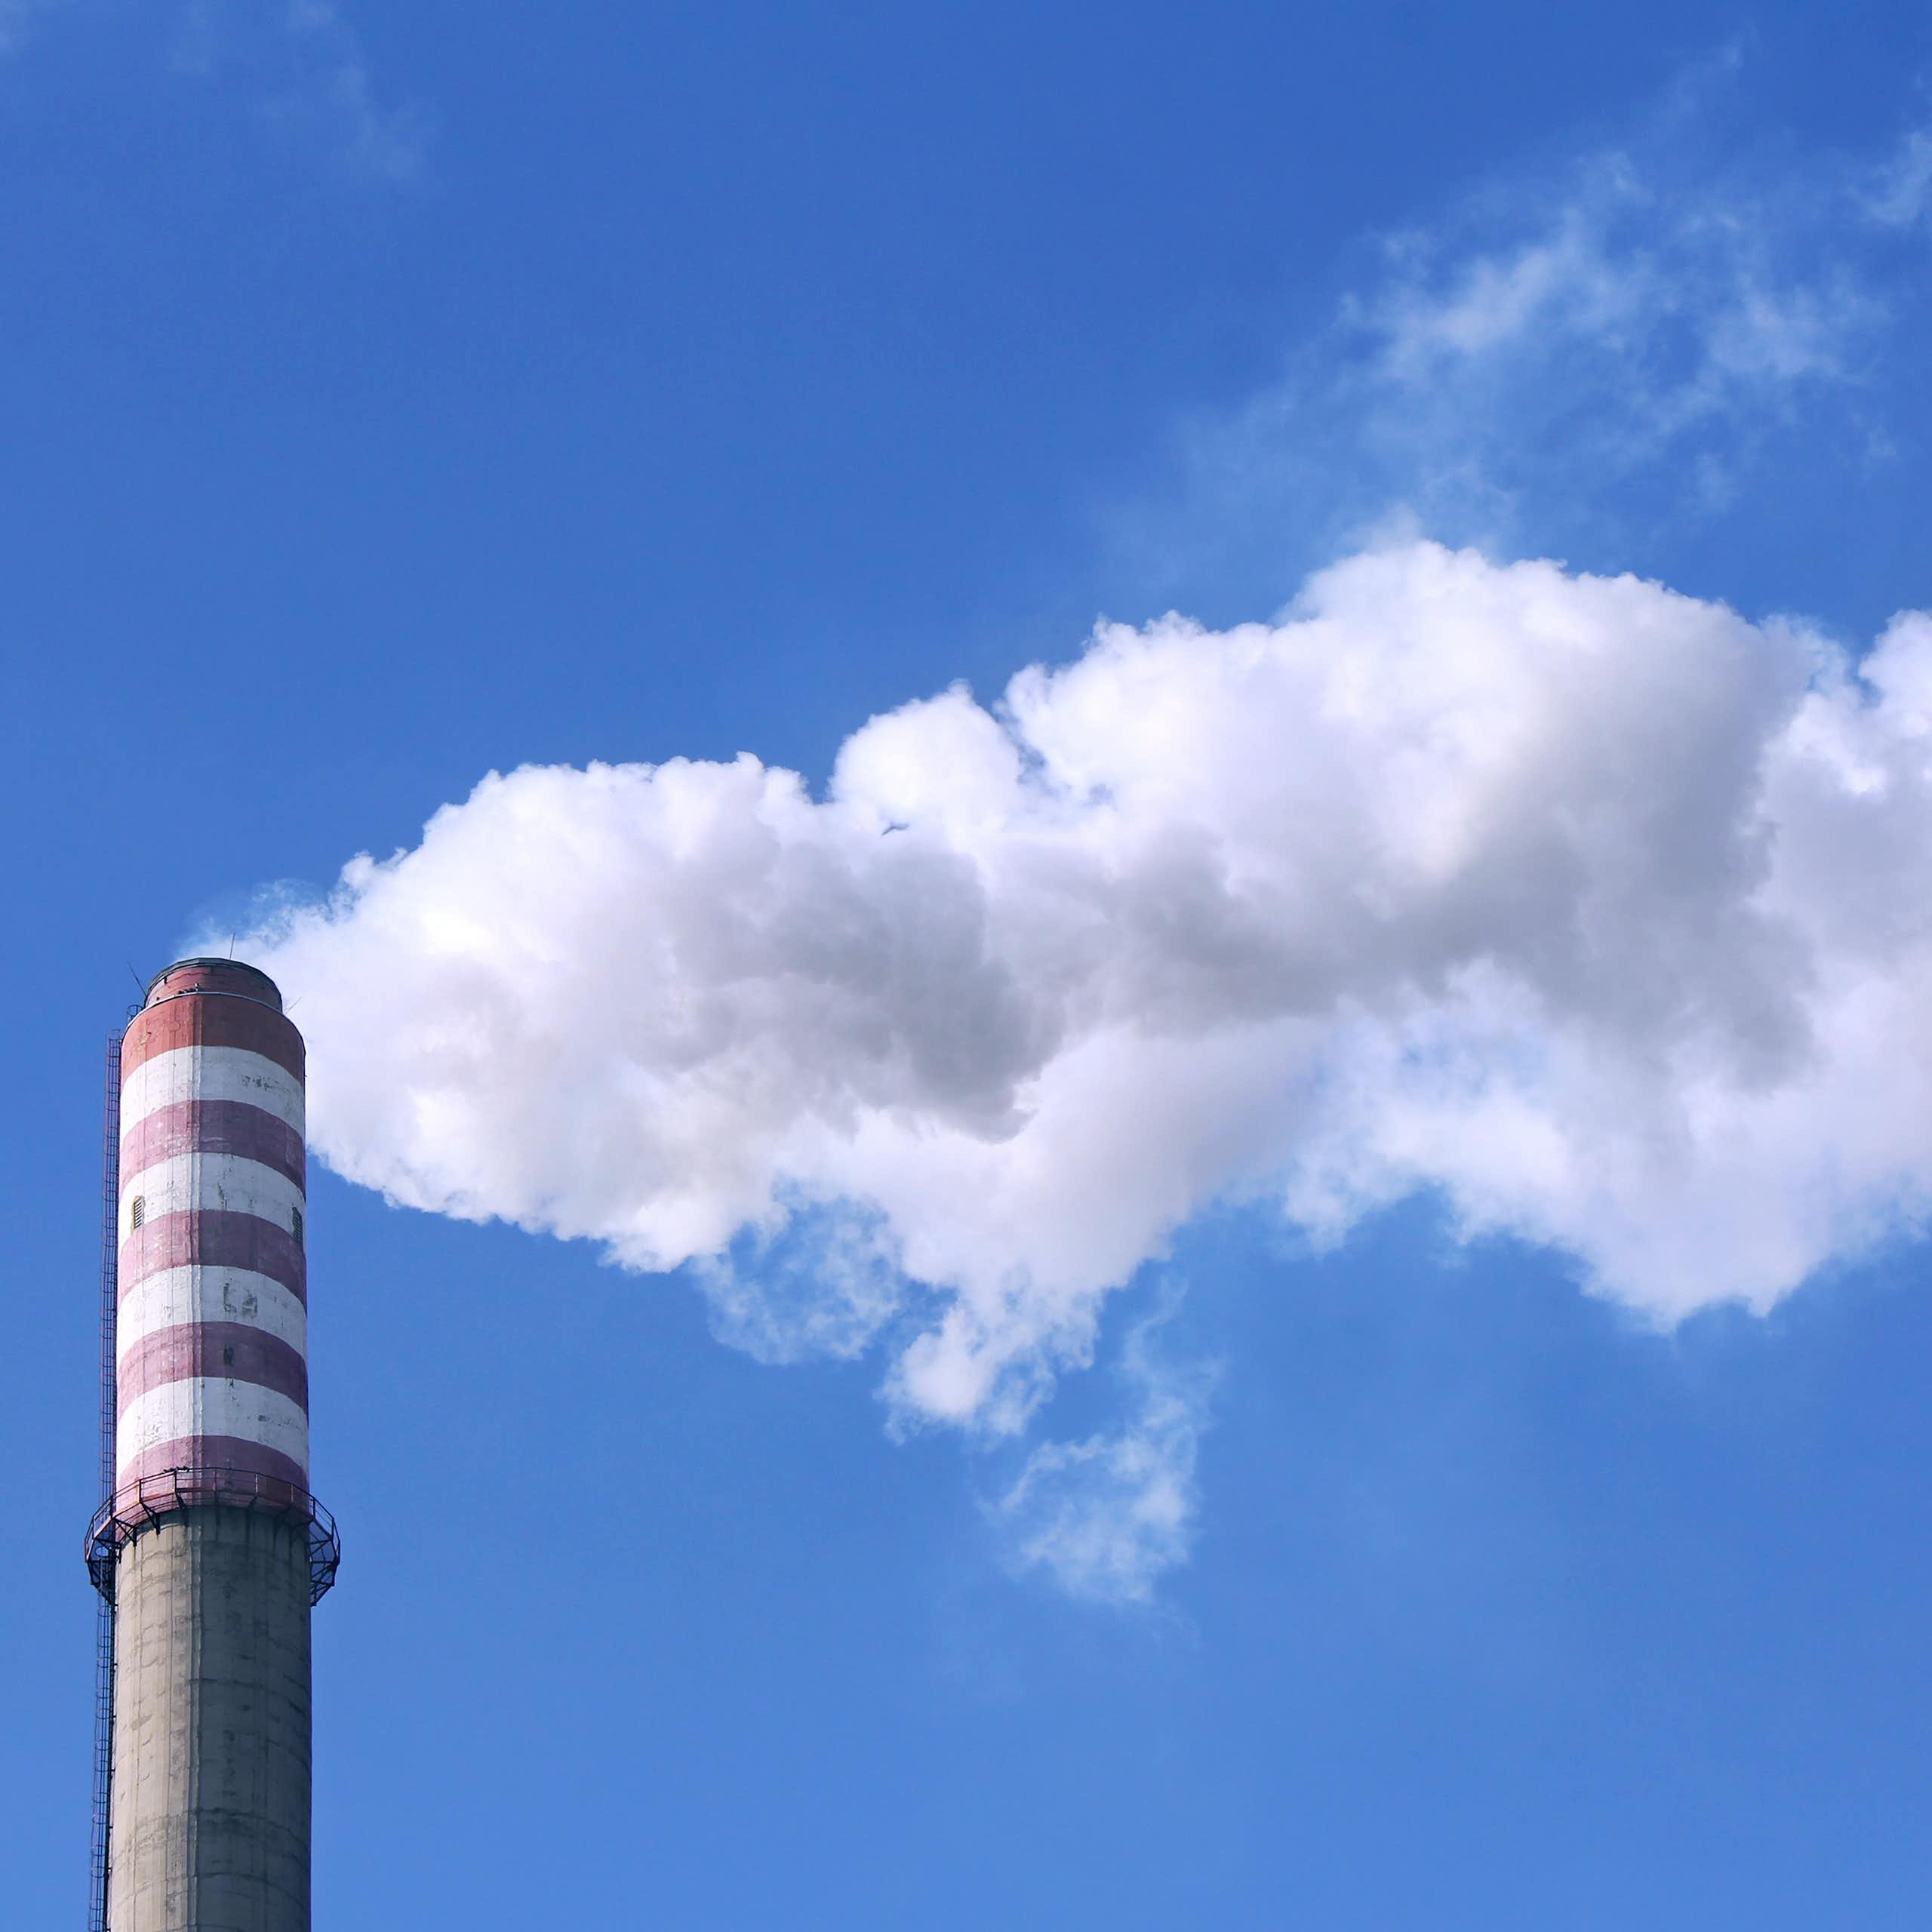 Dióxido de carbono: de contaminante a materia prima